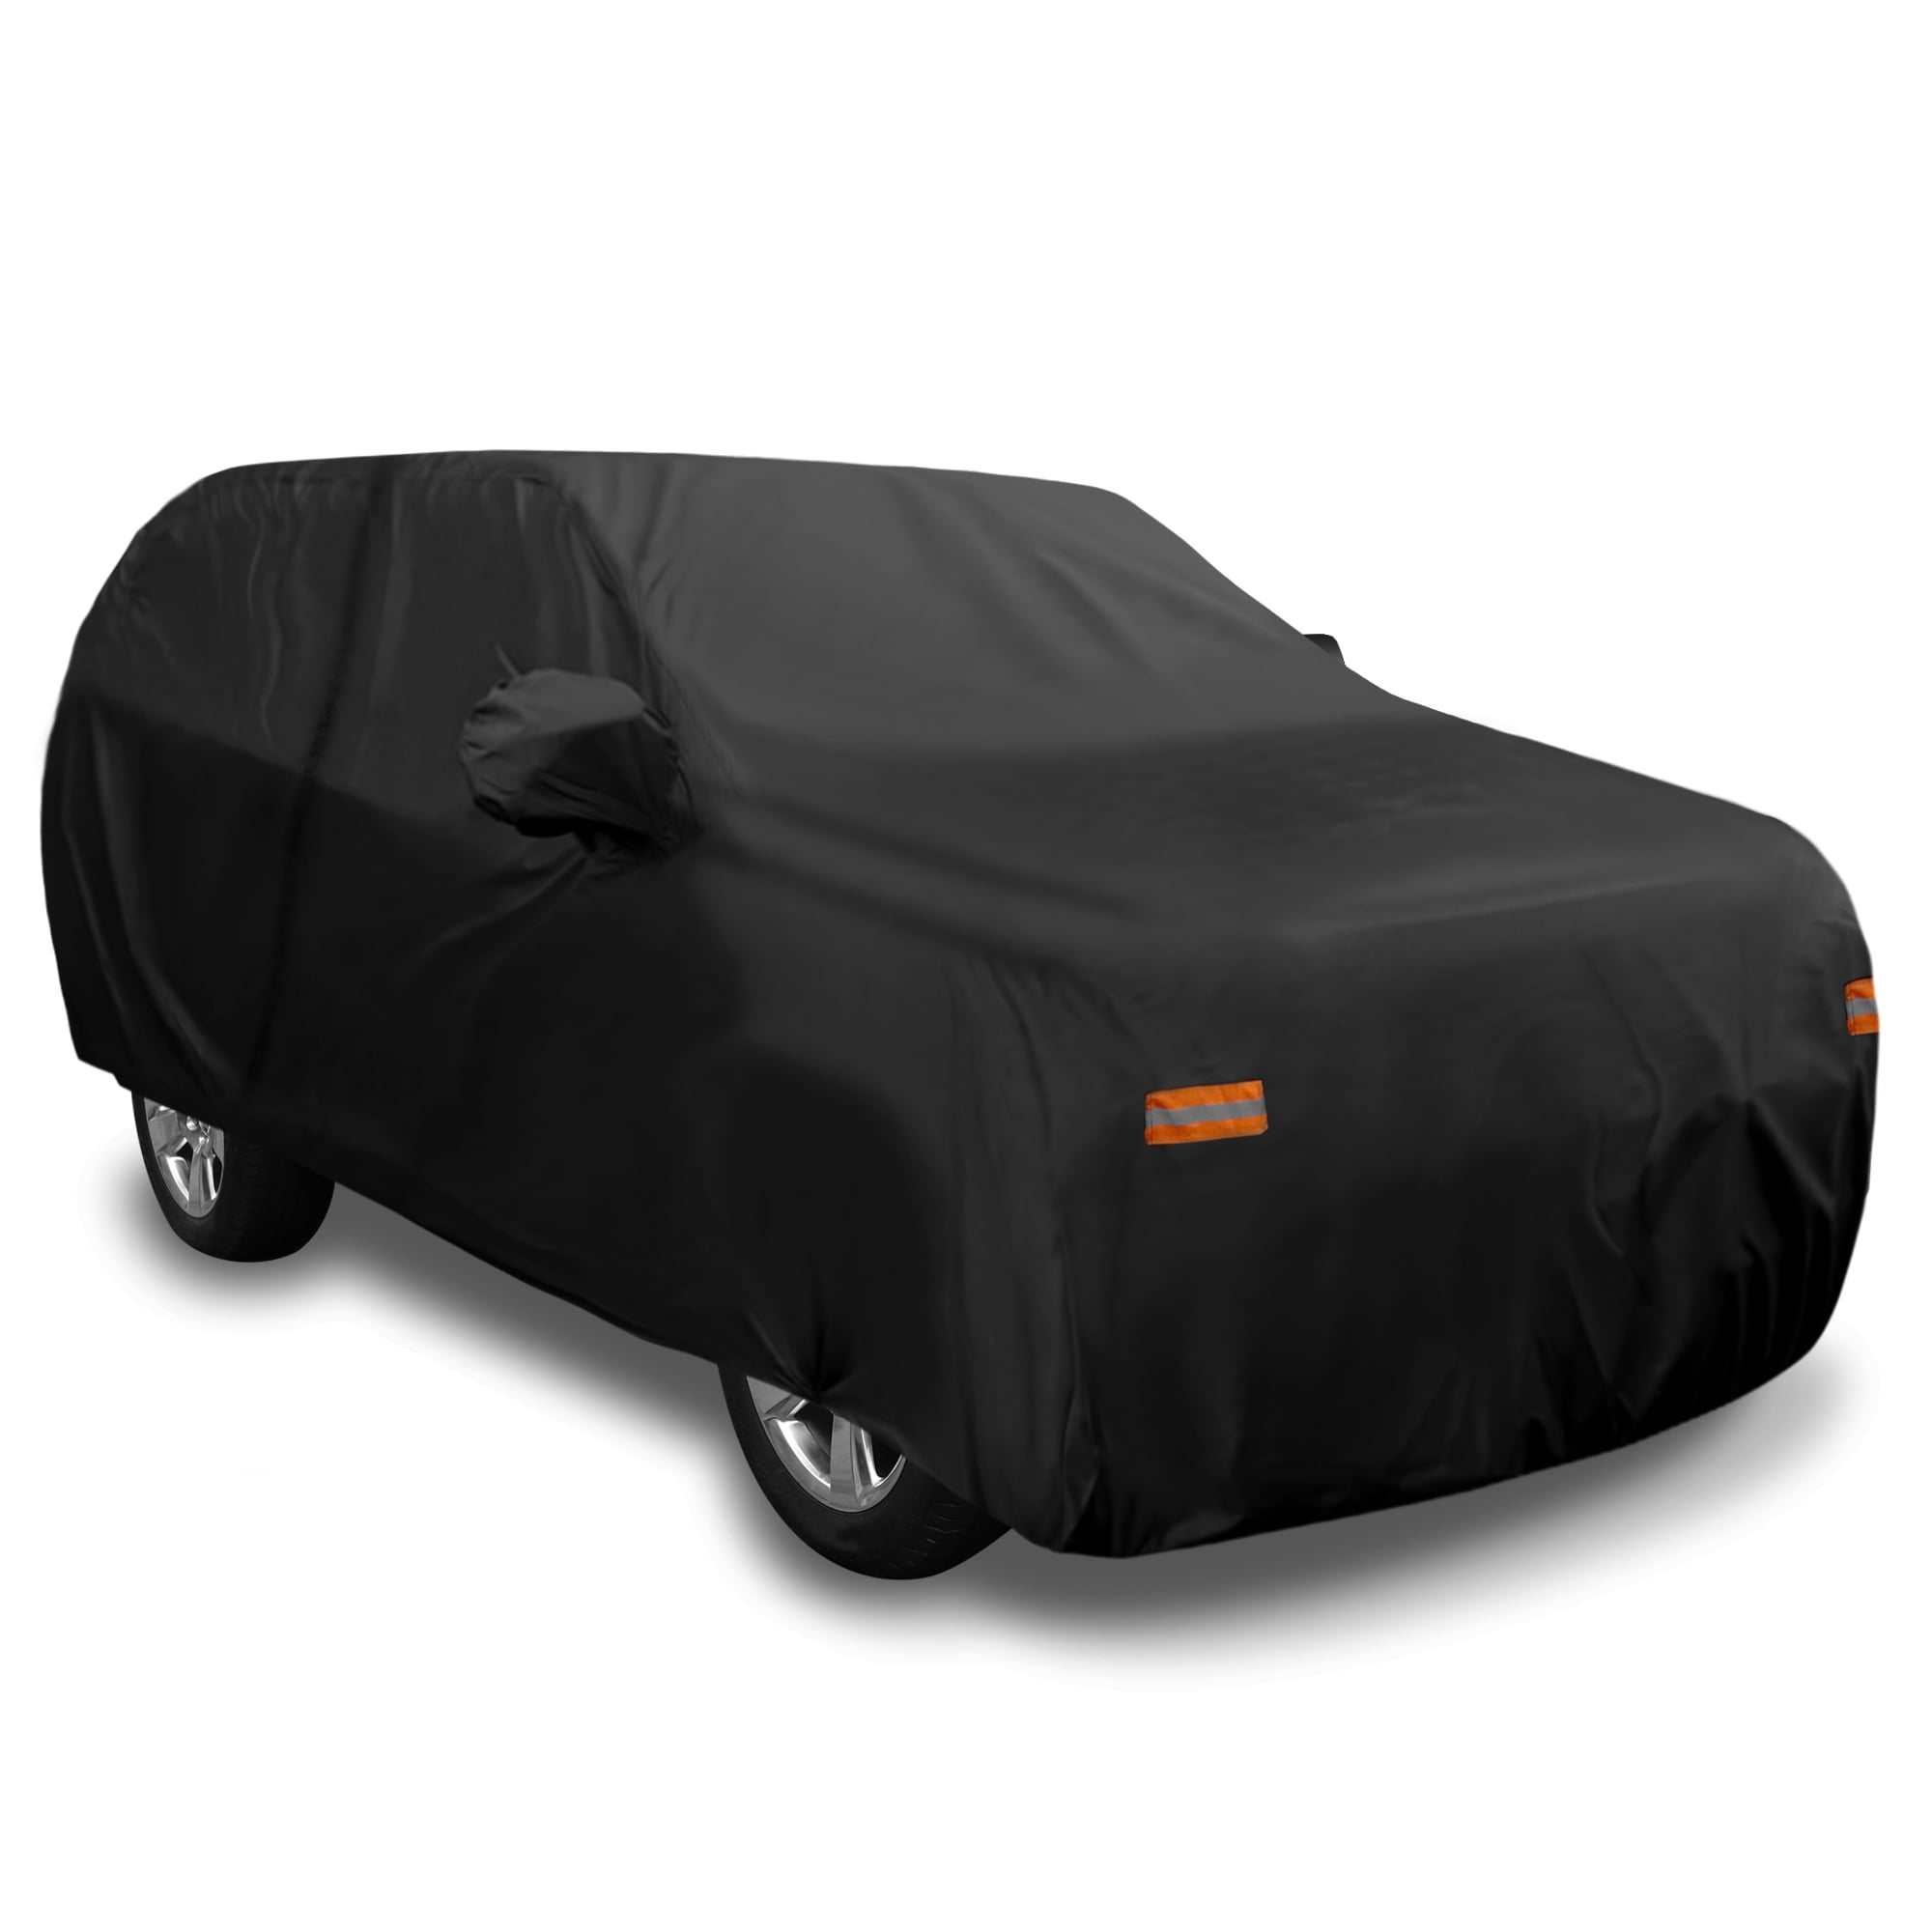 Buy AutoPop Matte Black Water Proof Car Cover for Chevrolet Spark